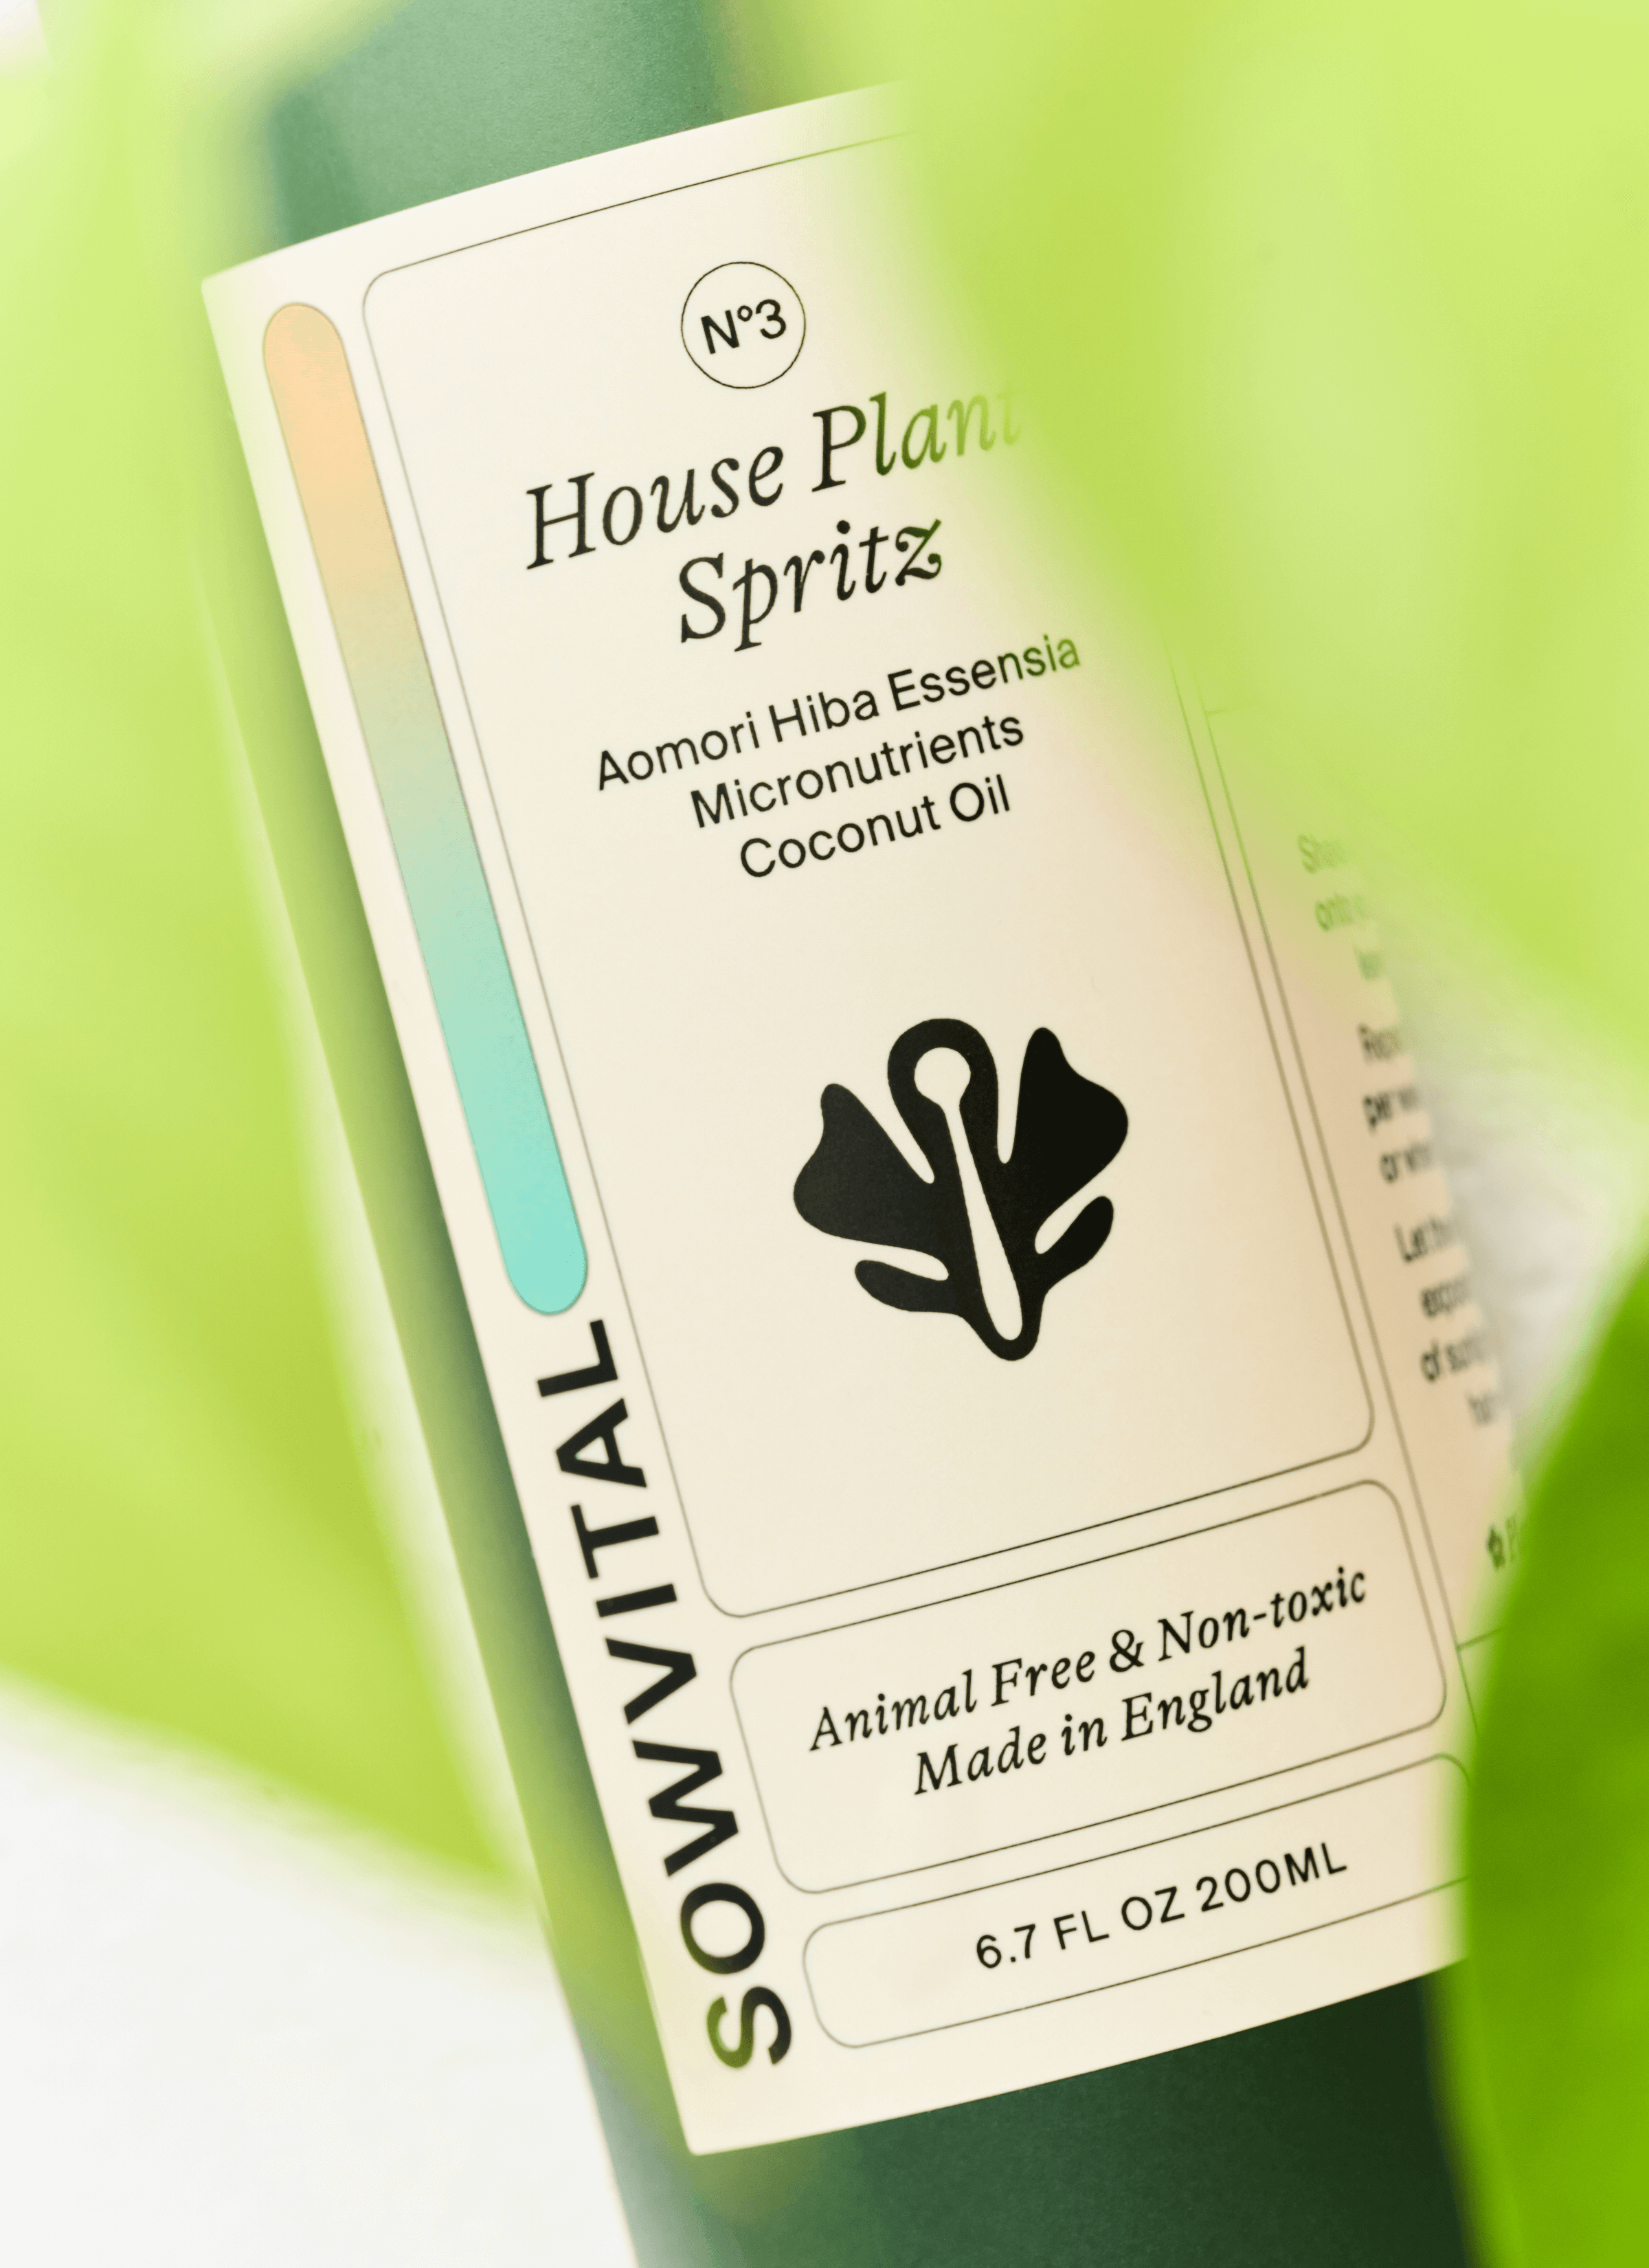 Sowvital house plant product - House plant spritz photoshoot.